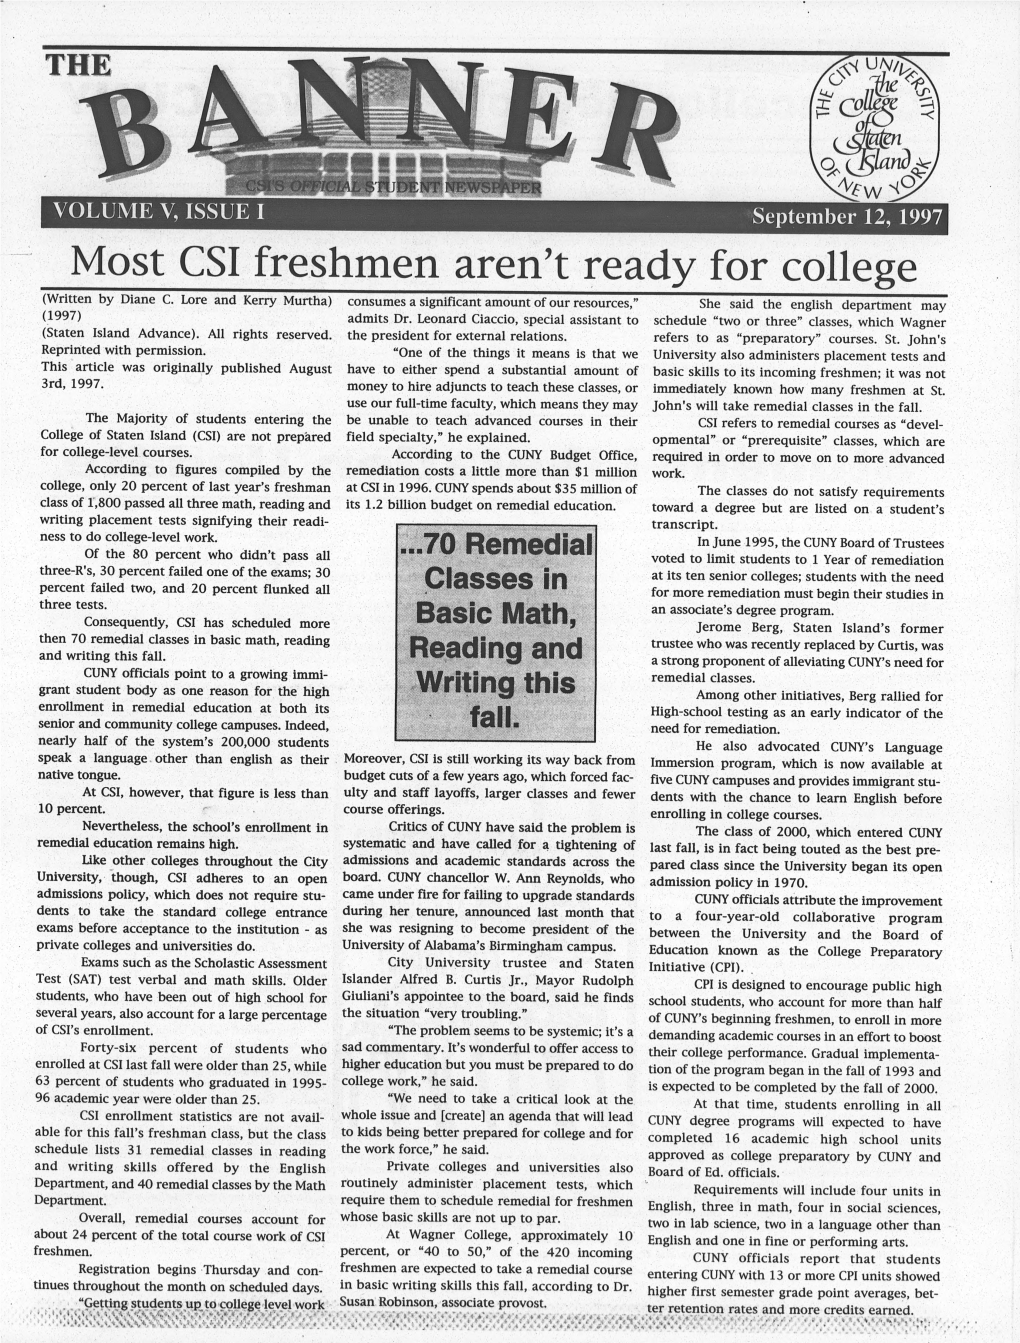 Most CSI Freshmen Aren't Ready for College (Written by Diane C